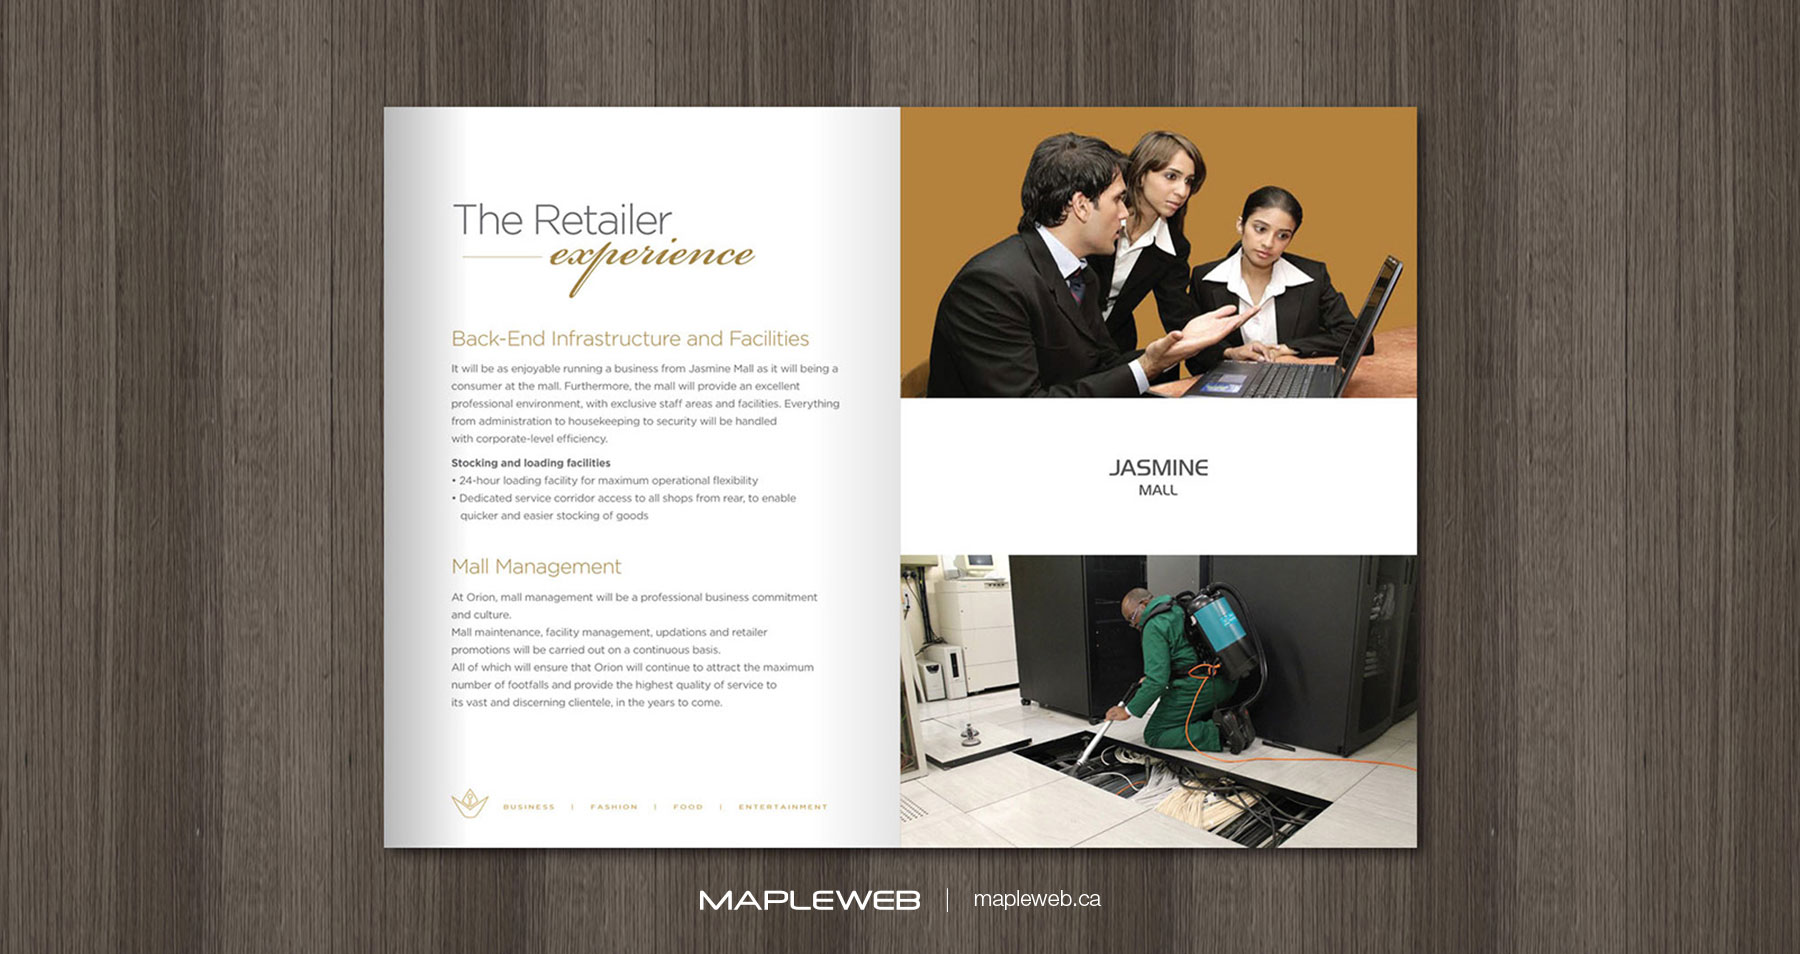 Jasmine Mall Brand design by Mapleweb Brochure Displaying Staff Discussing